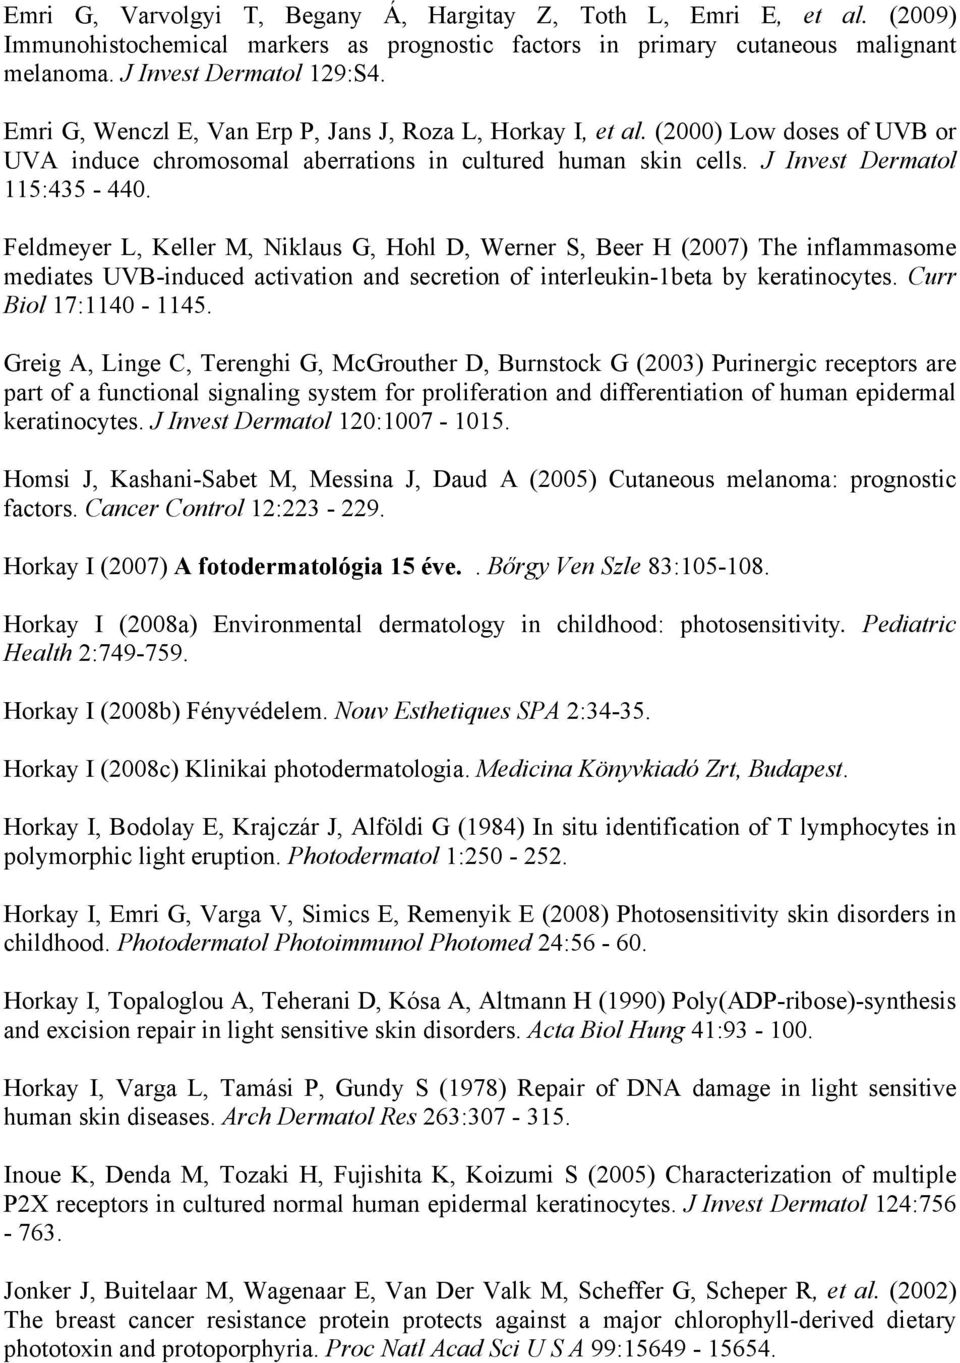 Feldmeyer L, Keller M, Niklaus G, Hohl D, Werner S, Beer H (2007) The inflammasome mediates UVB-induced activation and secretion of interleukin-1beta by keratinocytes. Curr Biol 17:1140-1145.